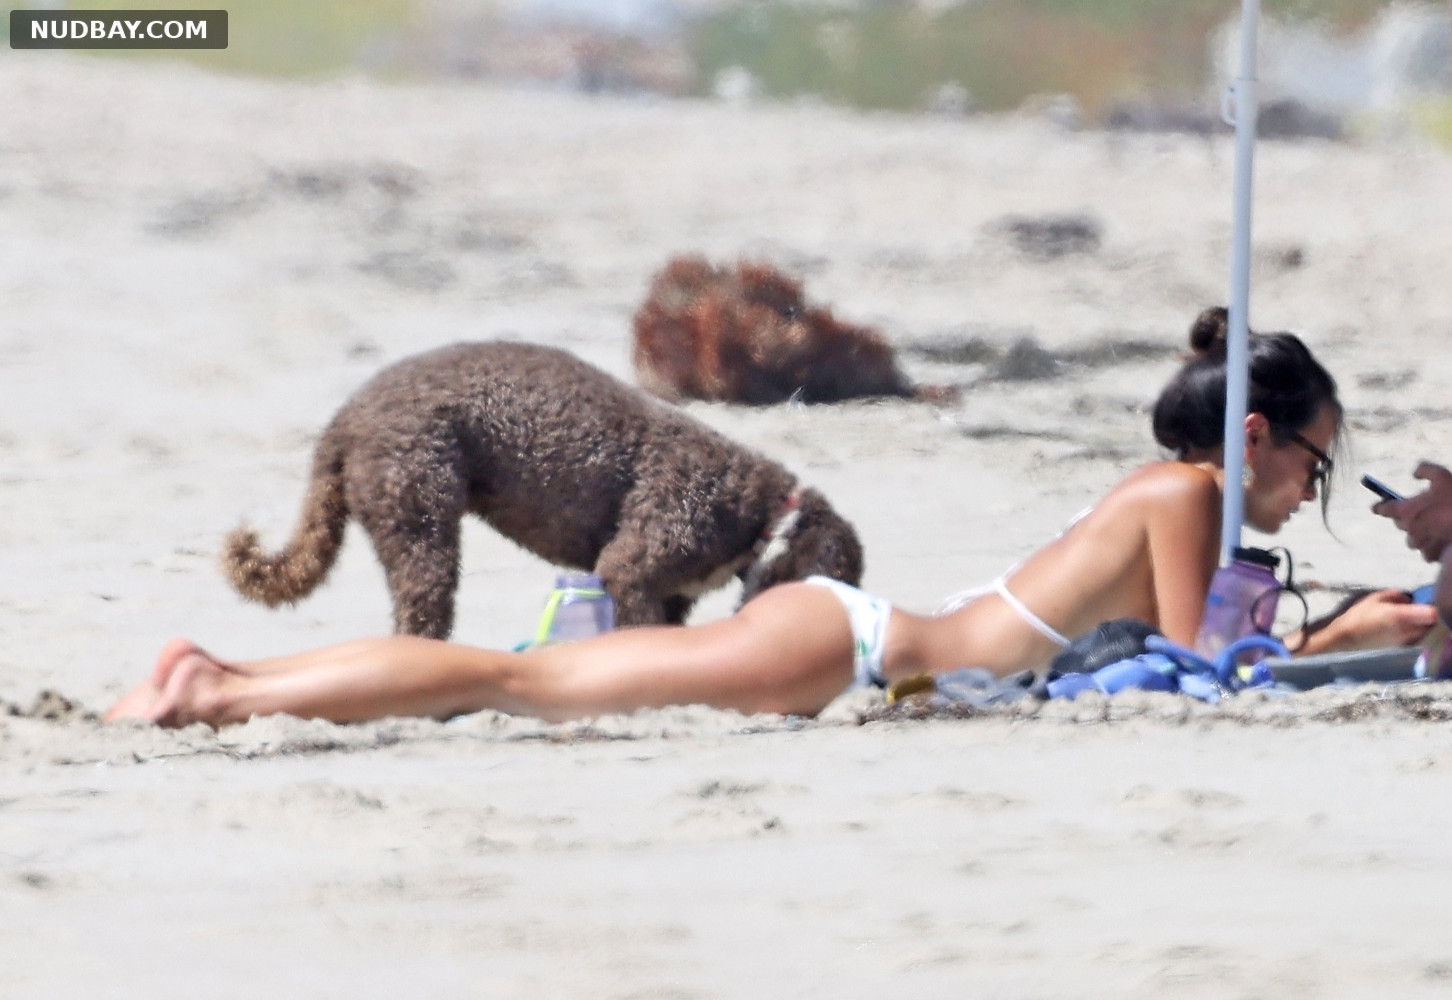 Jordana Brewster Juicy Ass on the beach in California Sep 24 2022